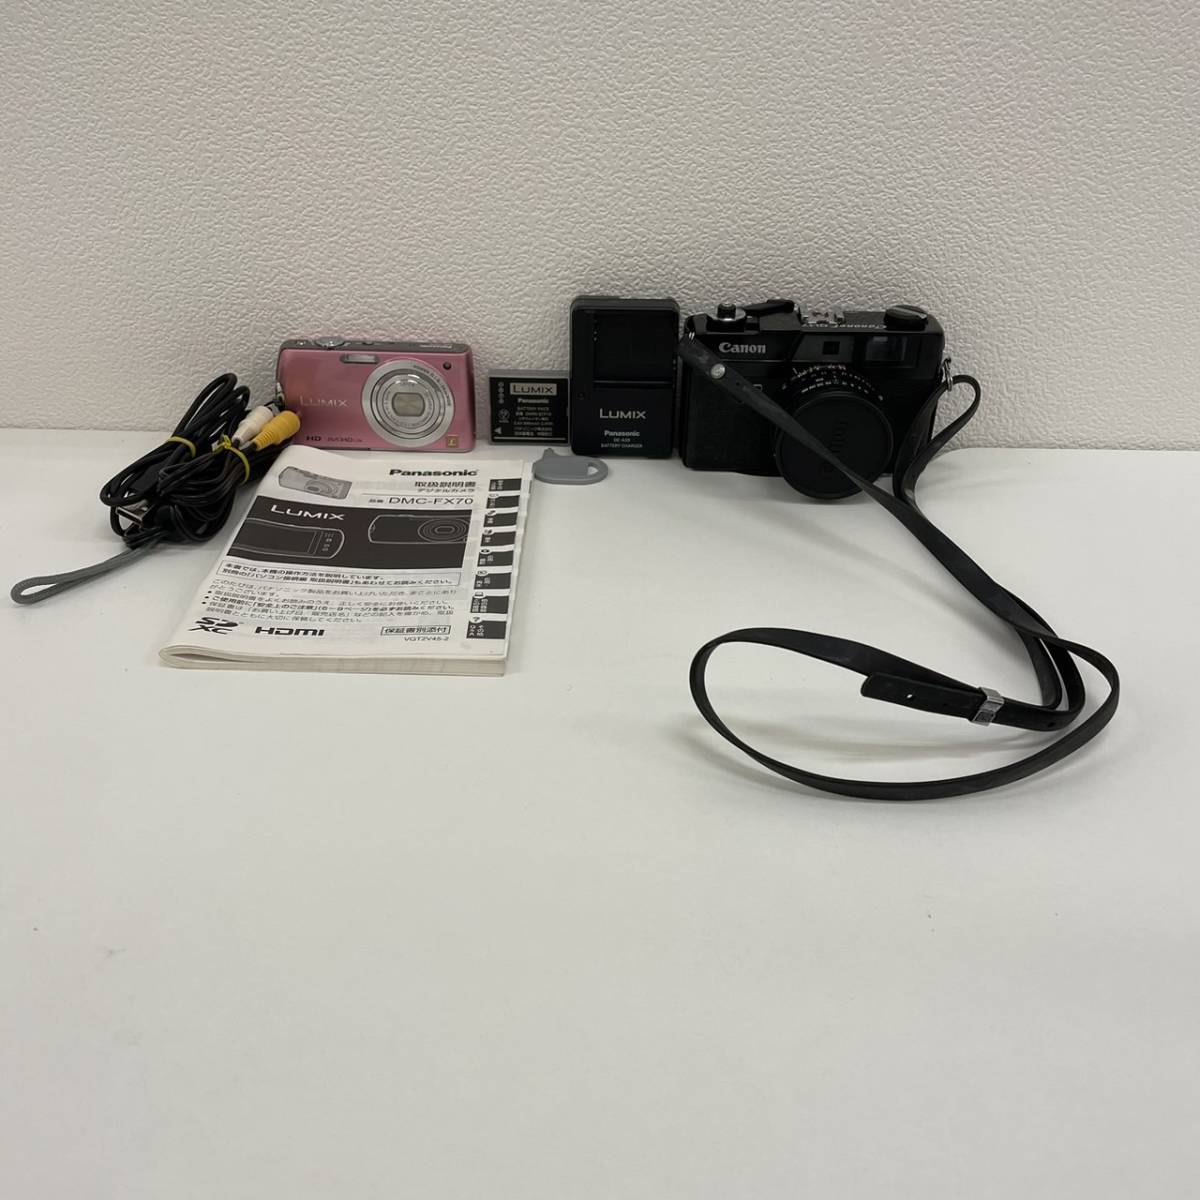 HPF-1653】 Panasonic パナソニック LUMIX DMC-FX70 デジタルカメラ